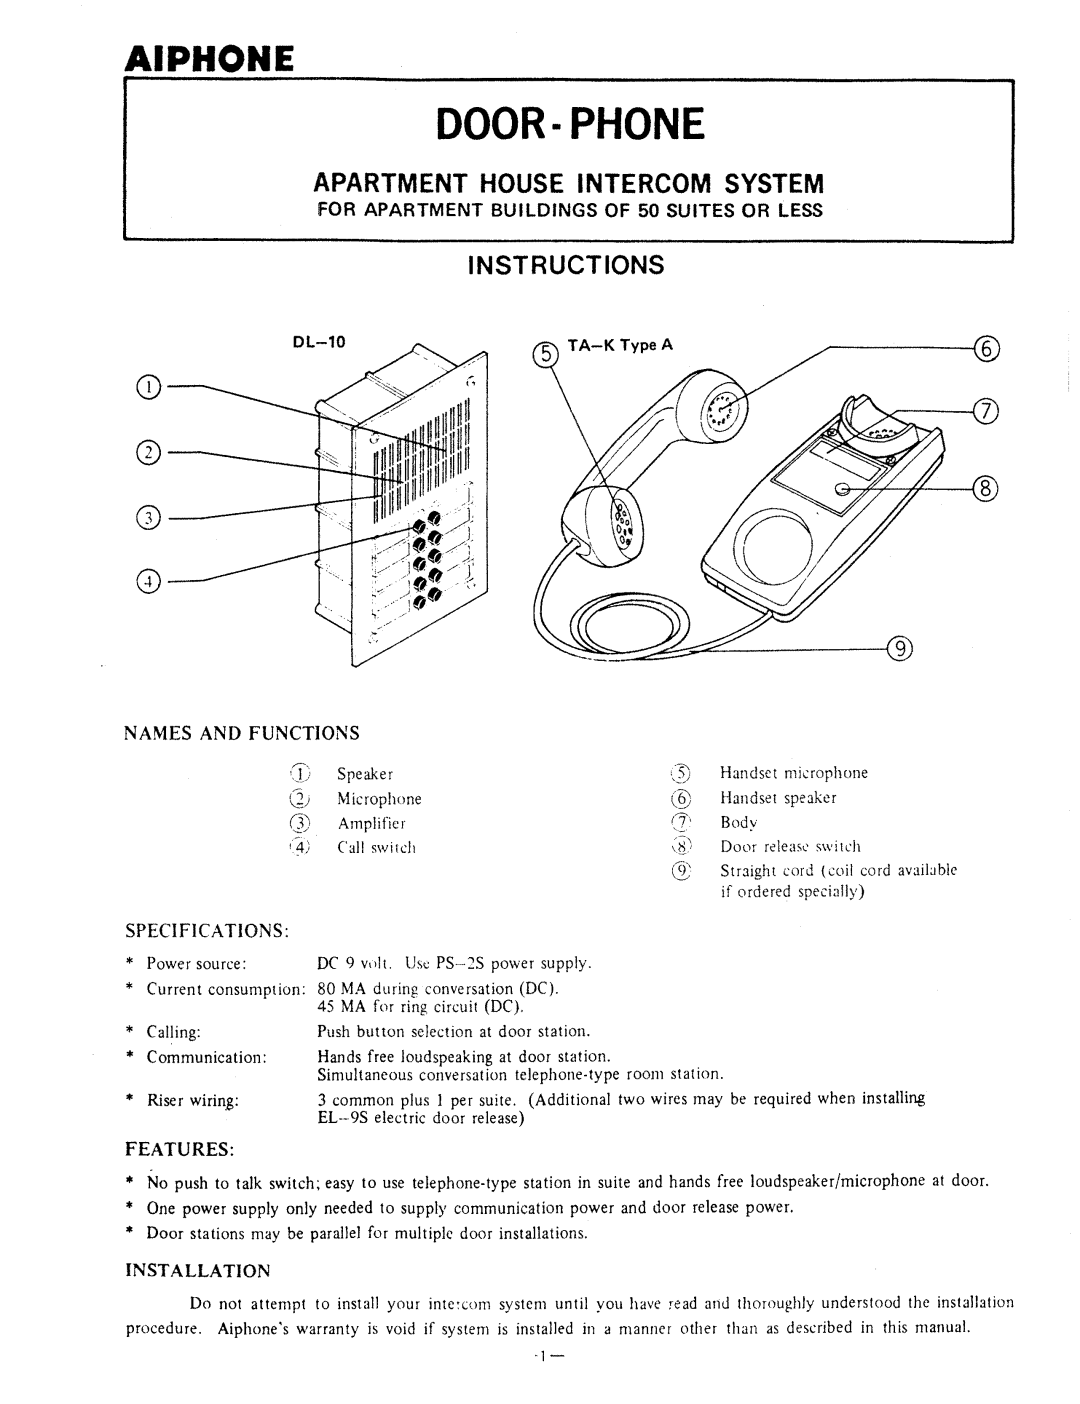 Aiphone TA-K TYPE A, DL-10 manual 